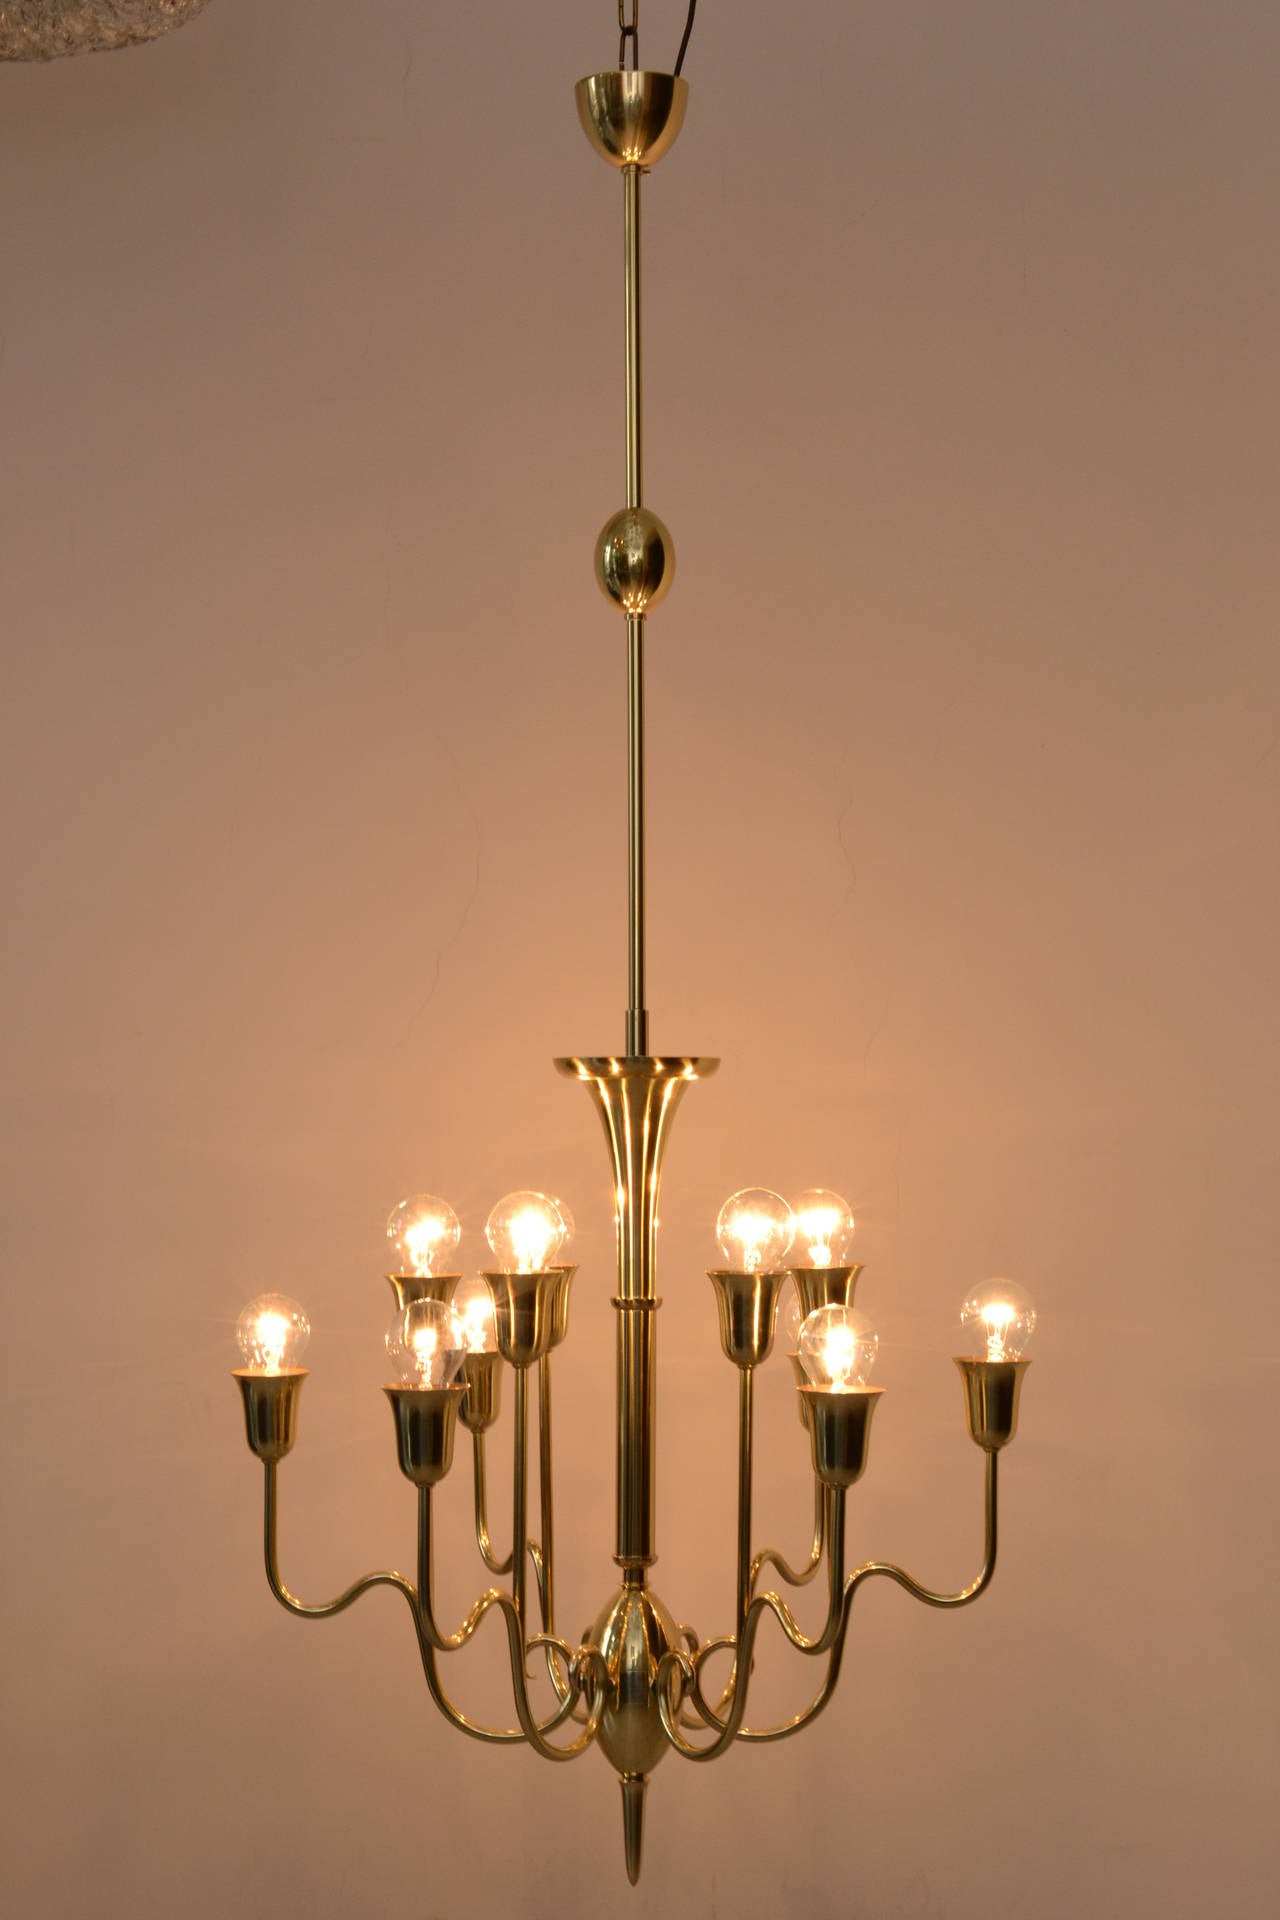 Mid-Century Modern Chandelier with Six Arms and Twelve Bulbs Designed J.T. Kalmar, Vienna 1950